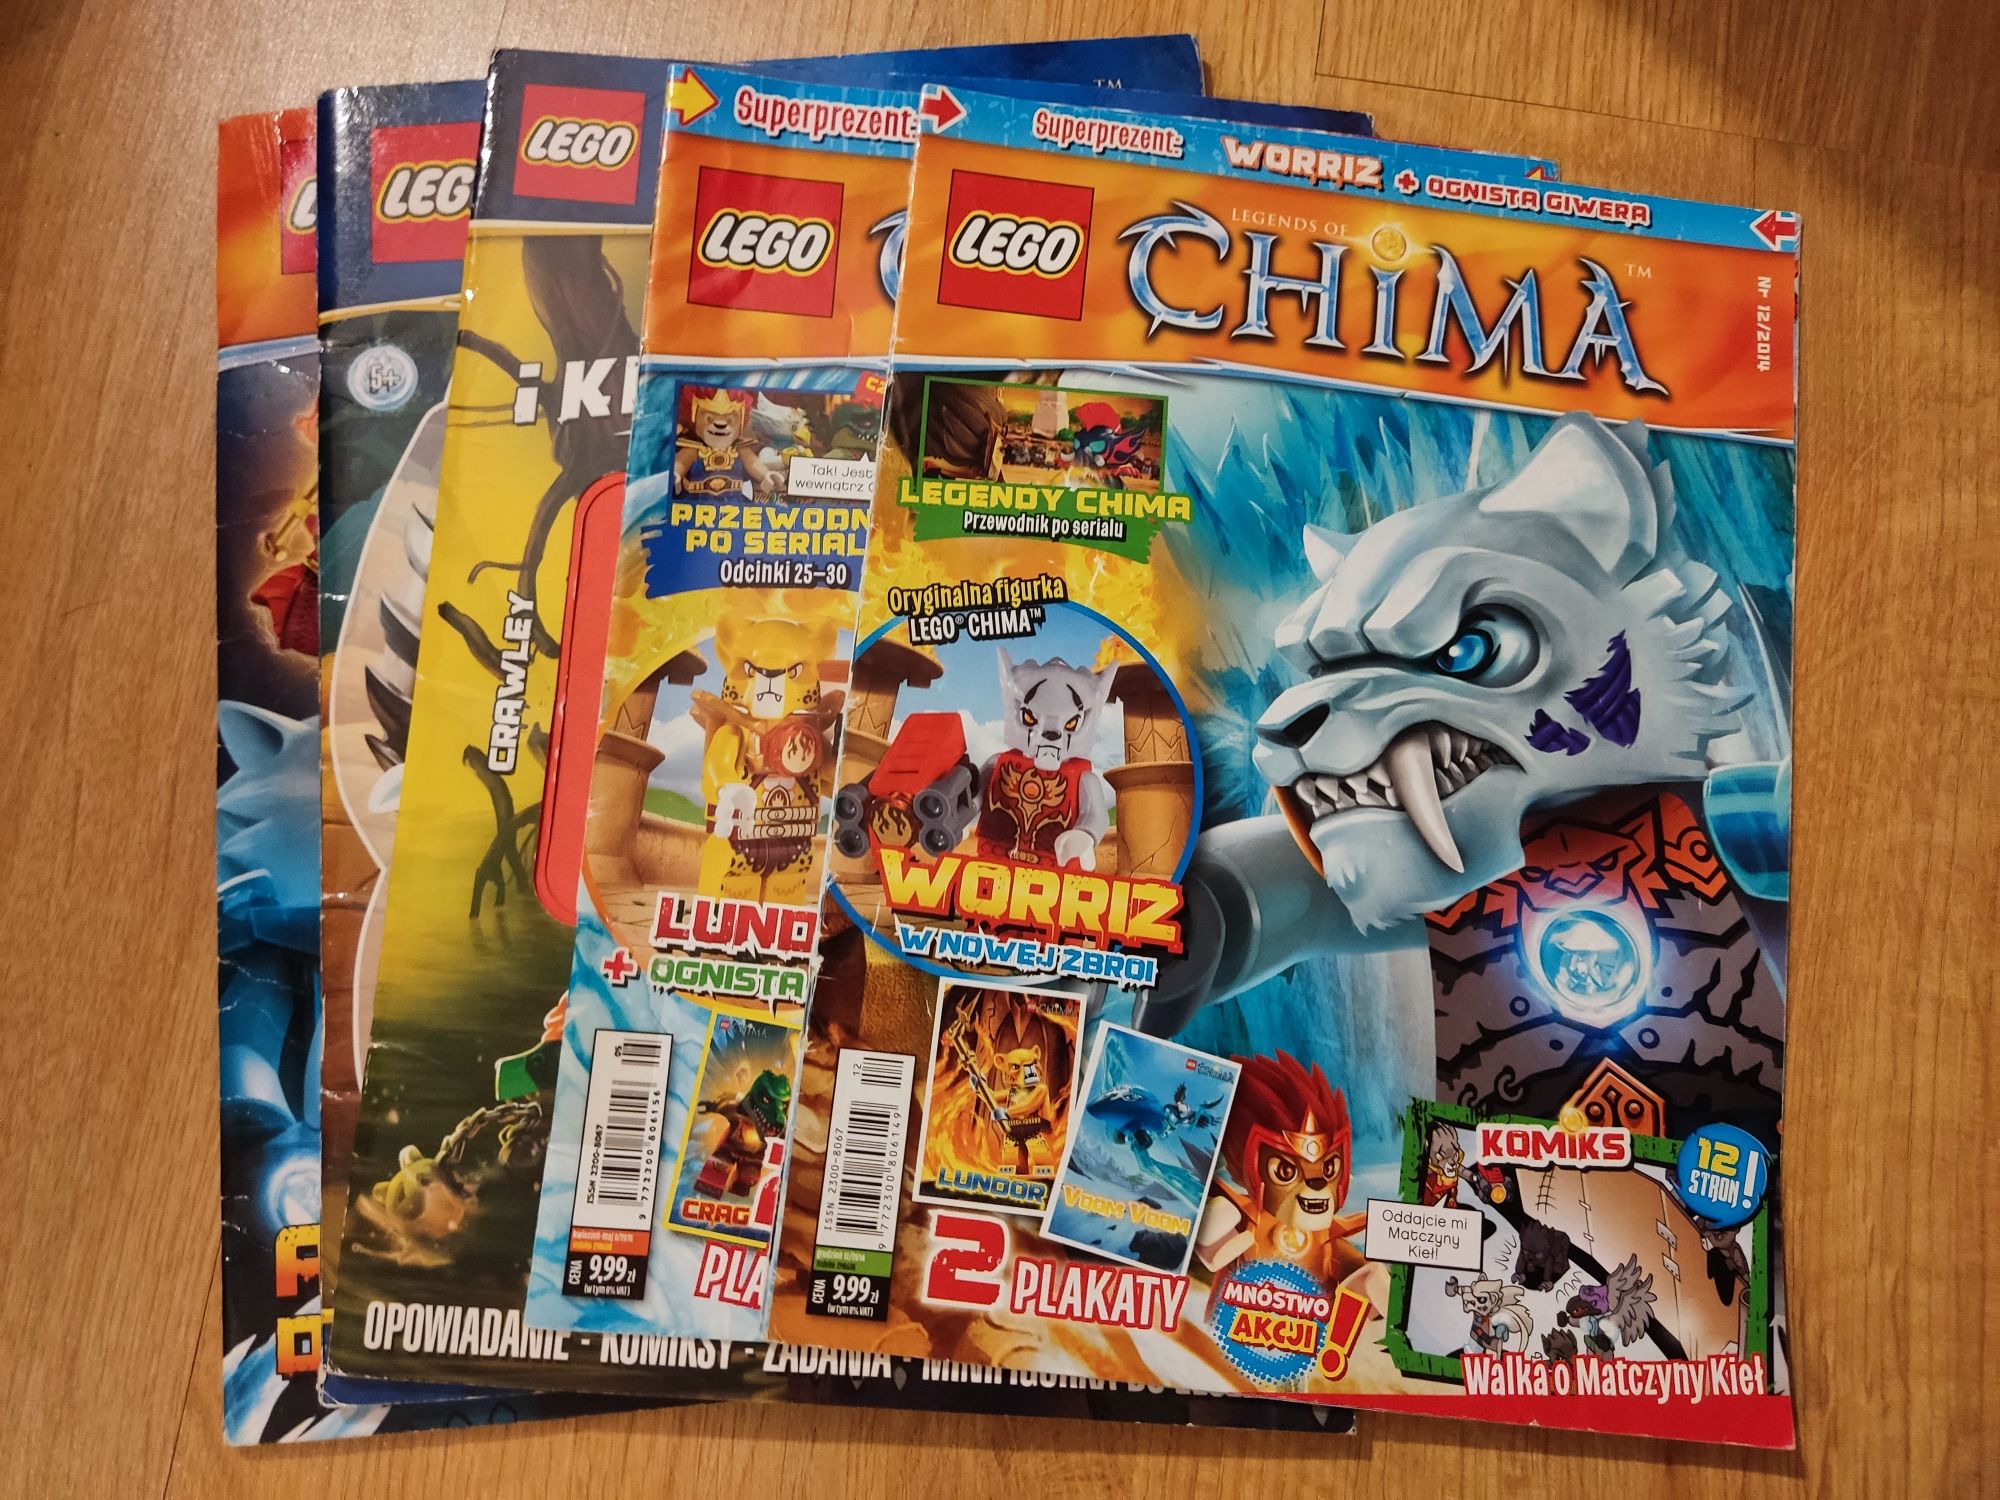 Gazetki LEGO Hidden side + Chima